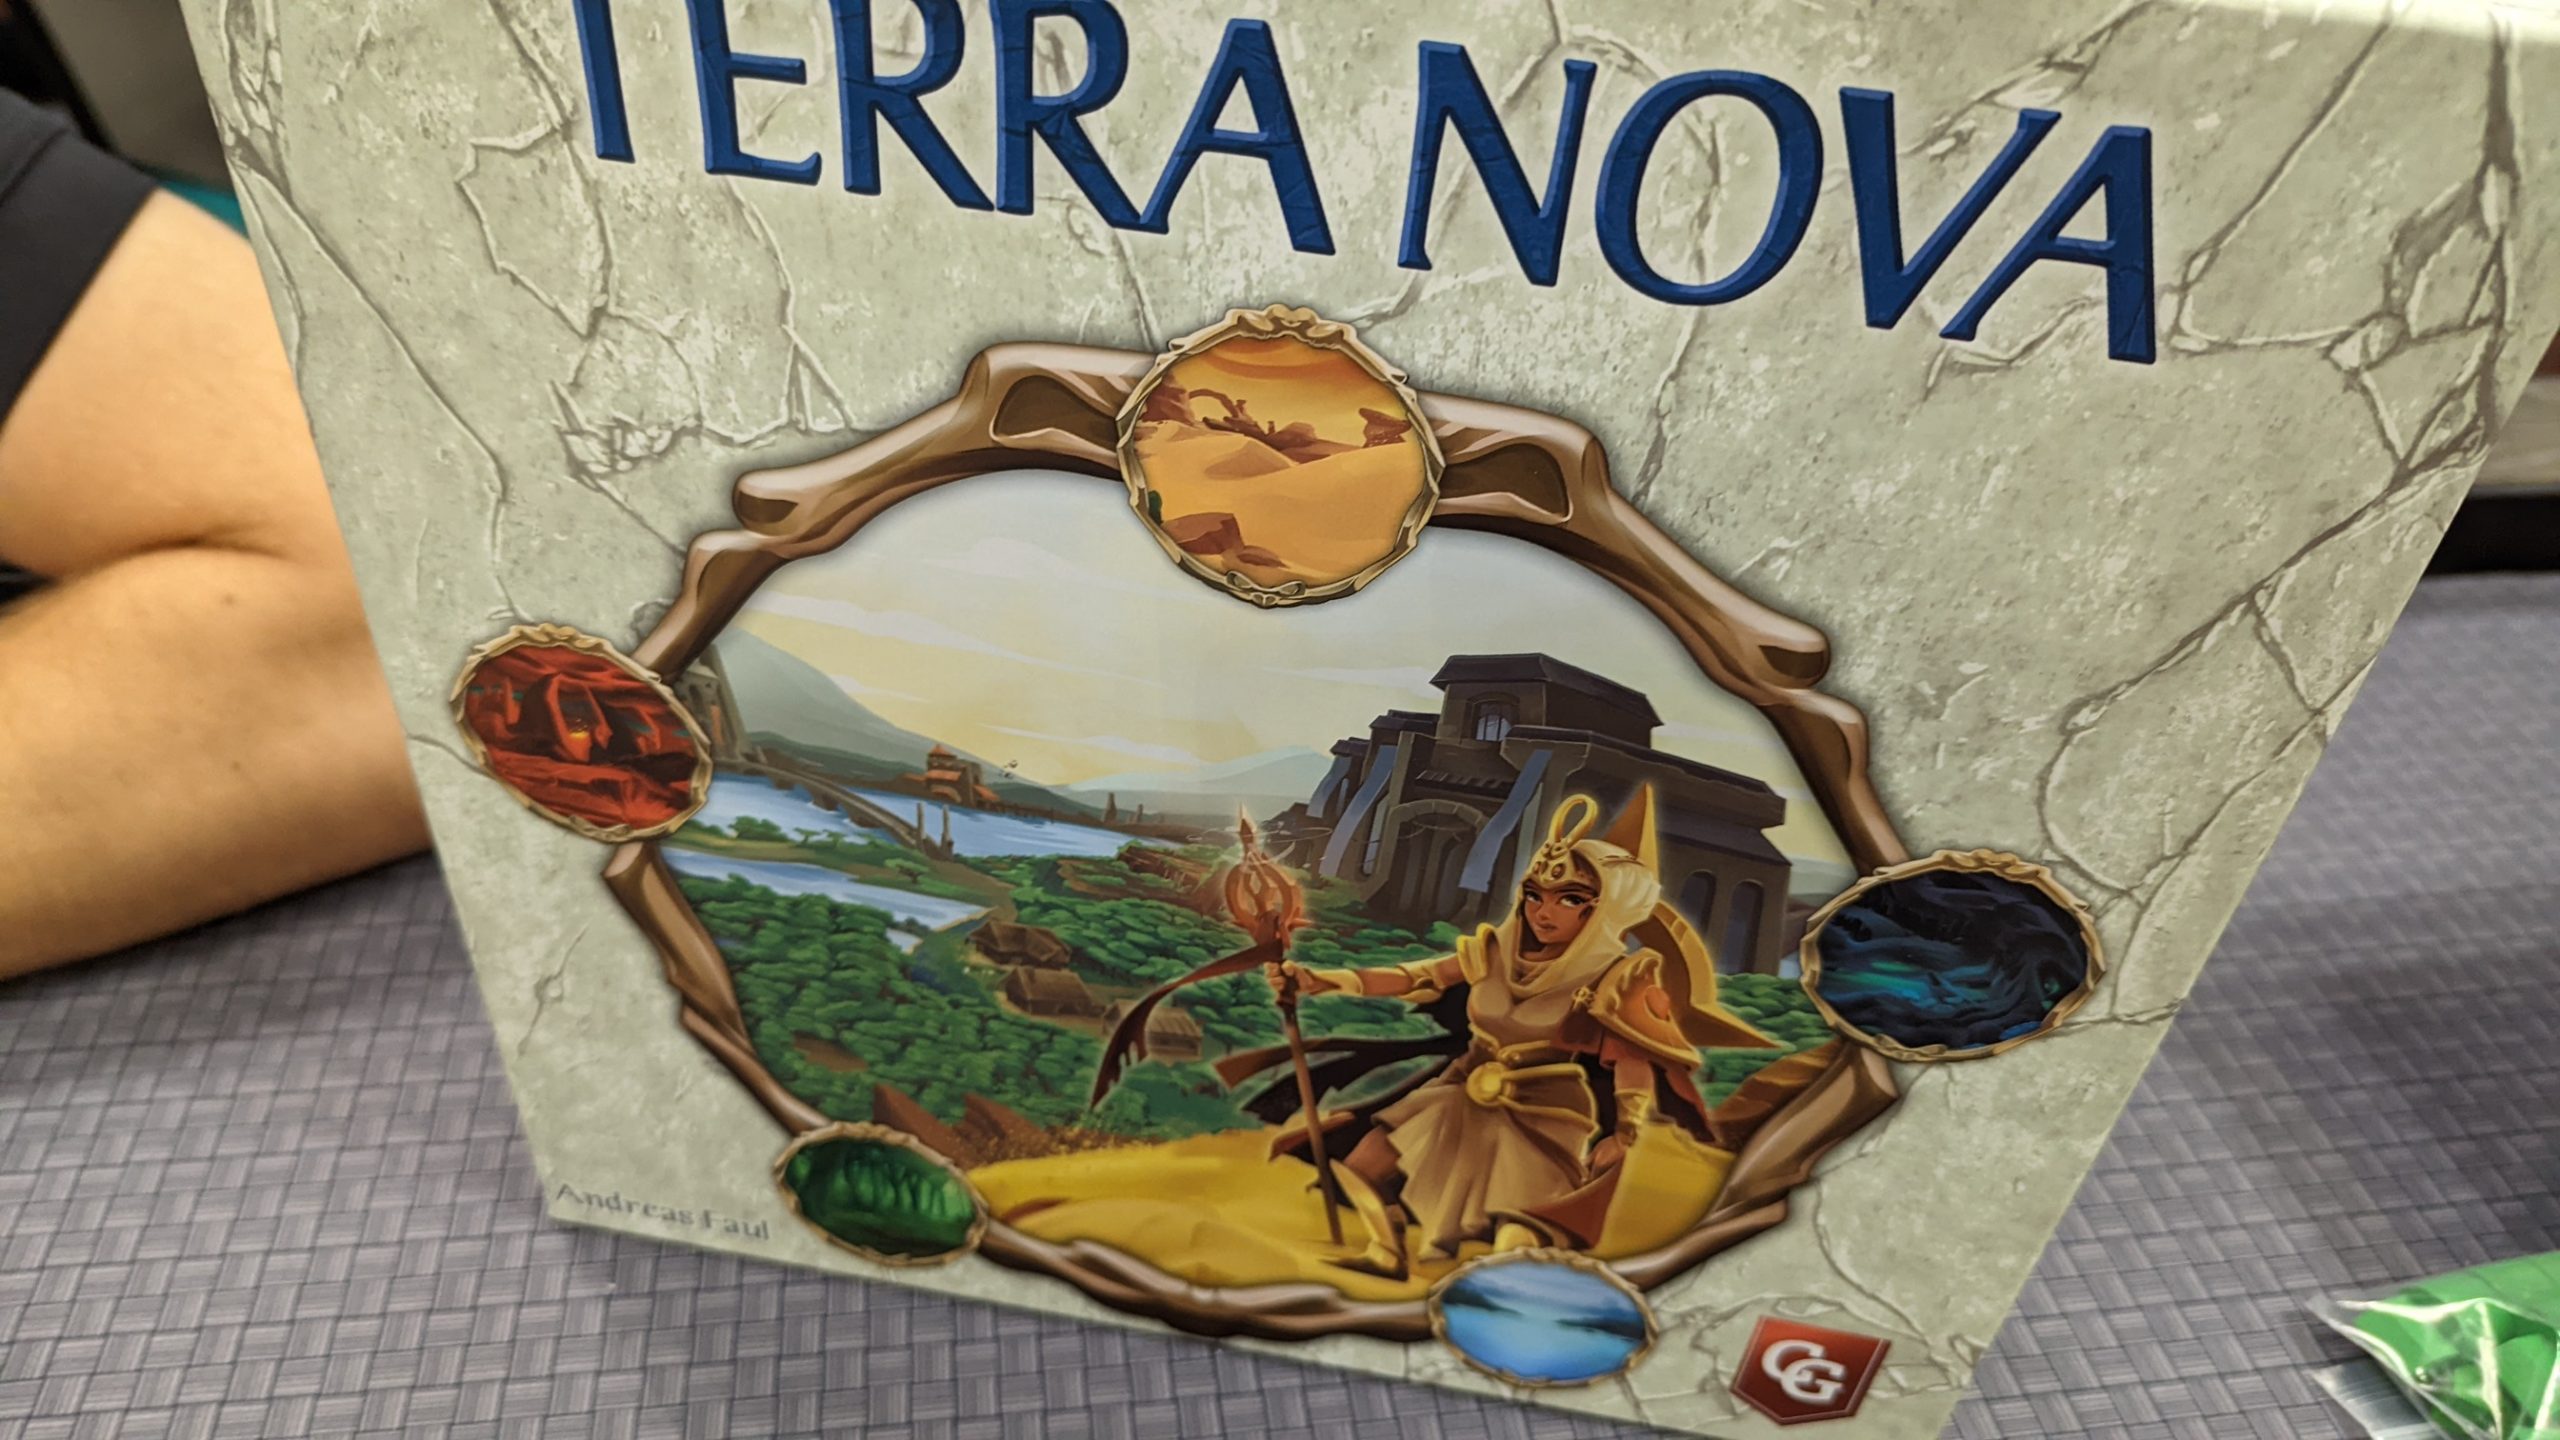 Terra Nova, Board Game